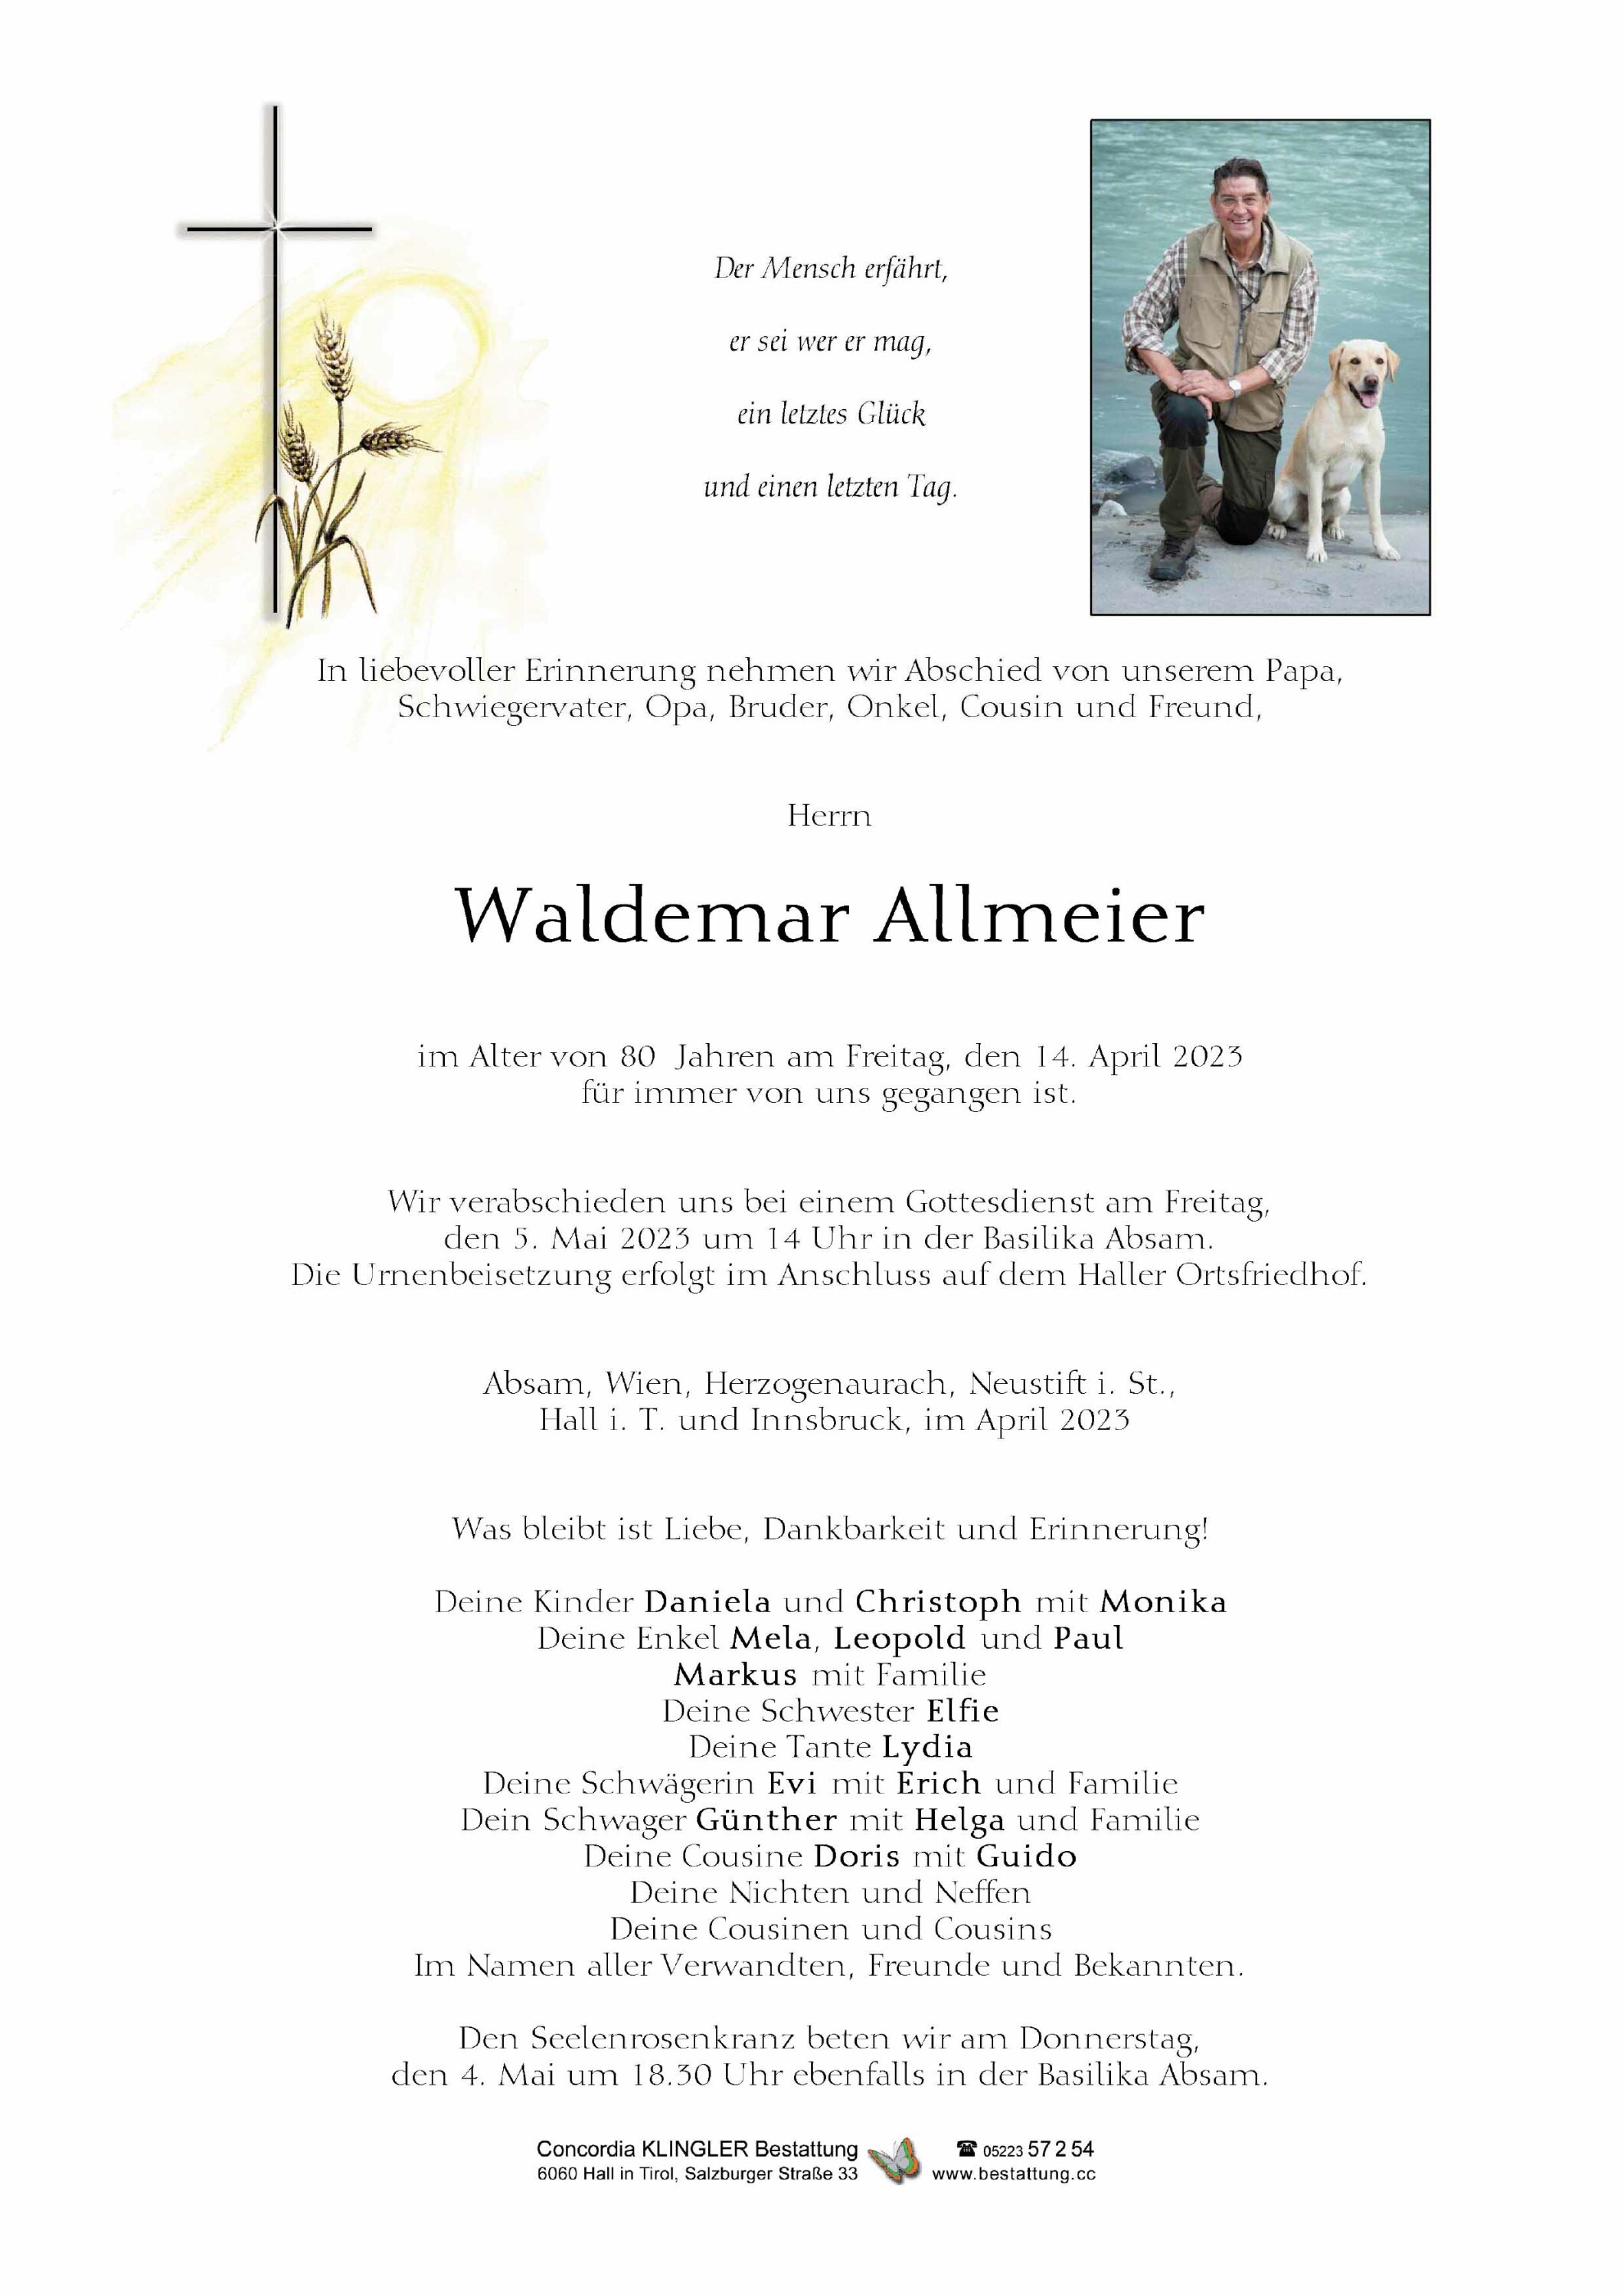 Waldemar Allmeier